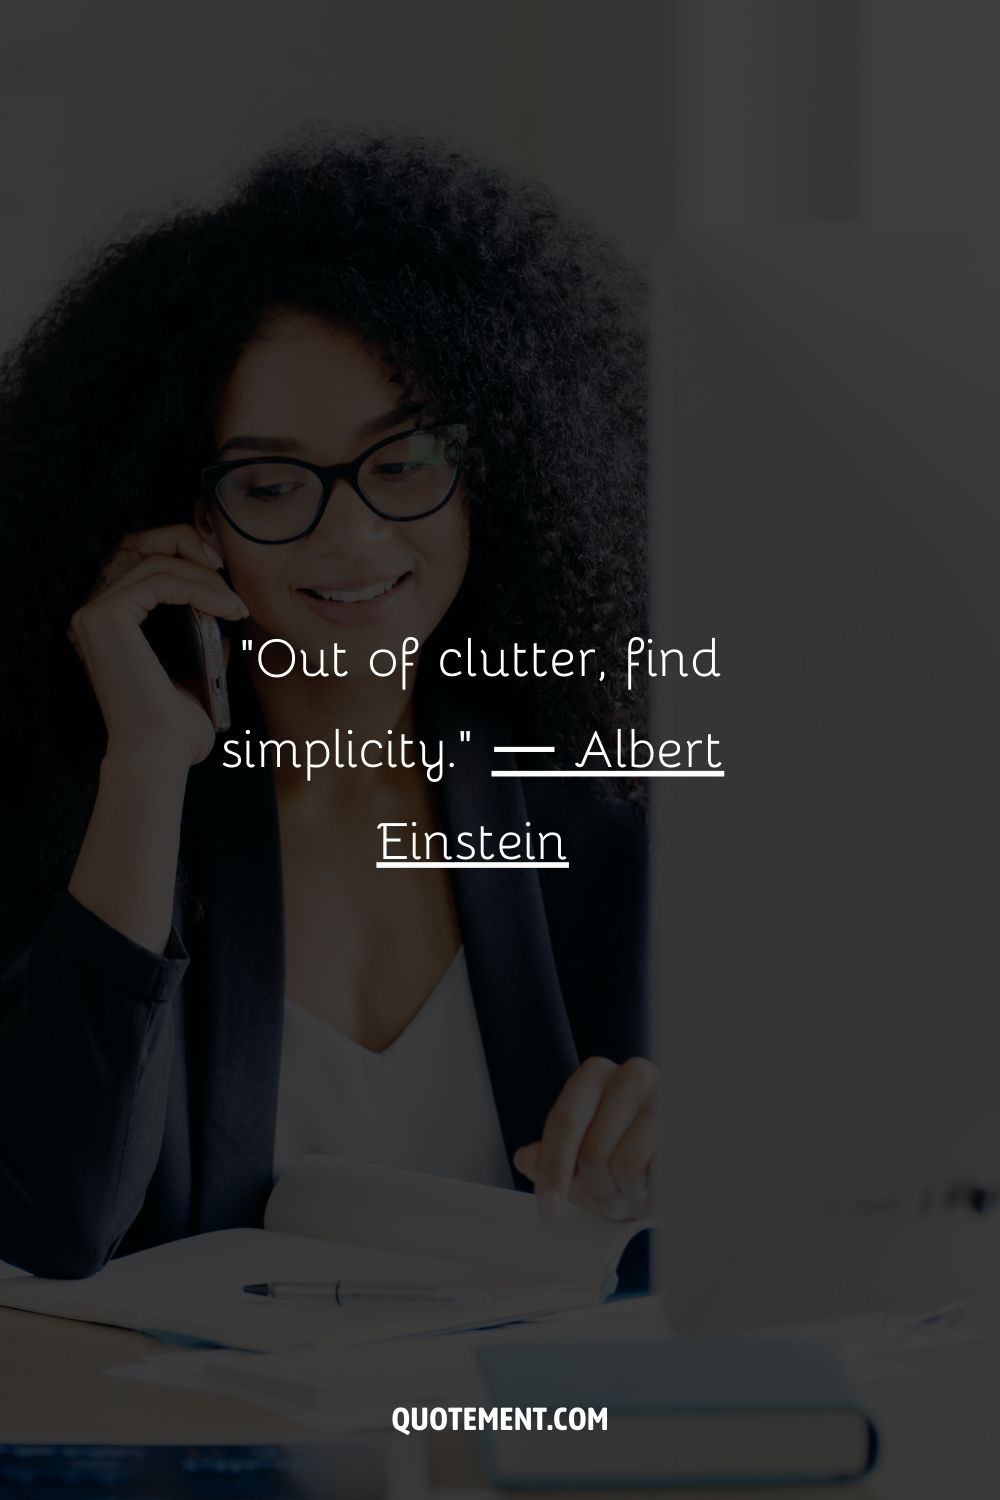 “Out of clutter, find simplicity.” ― Albert Einstein